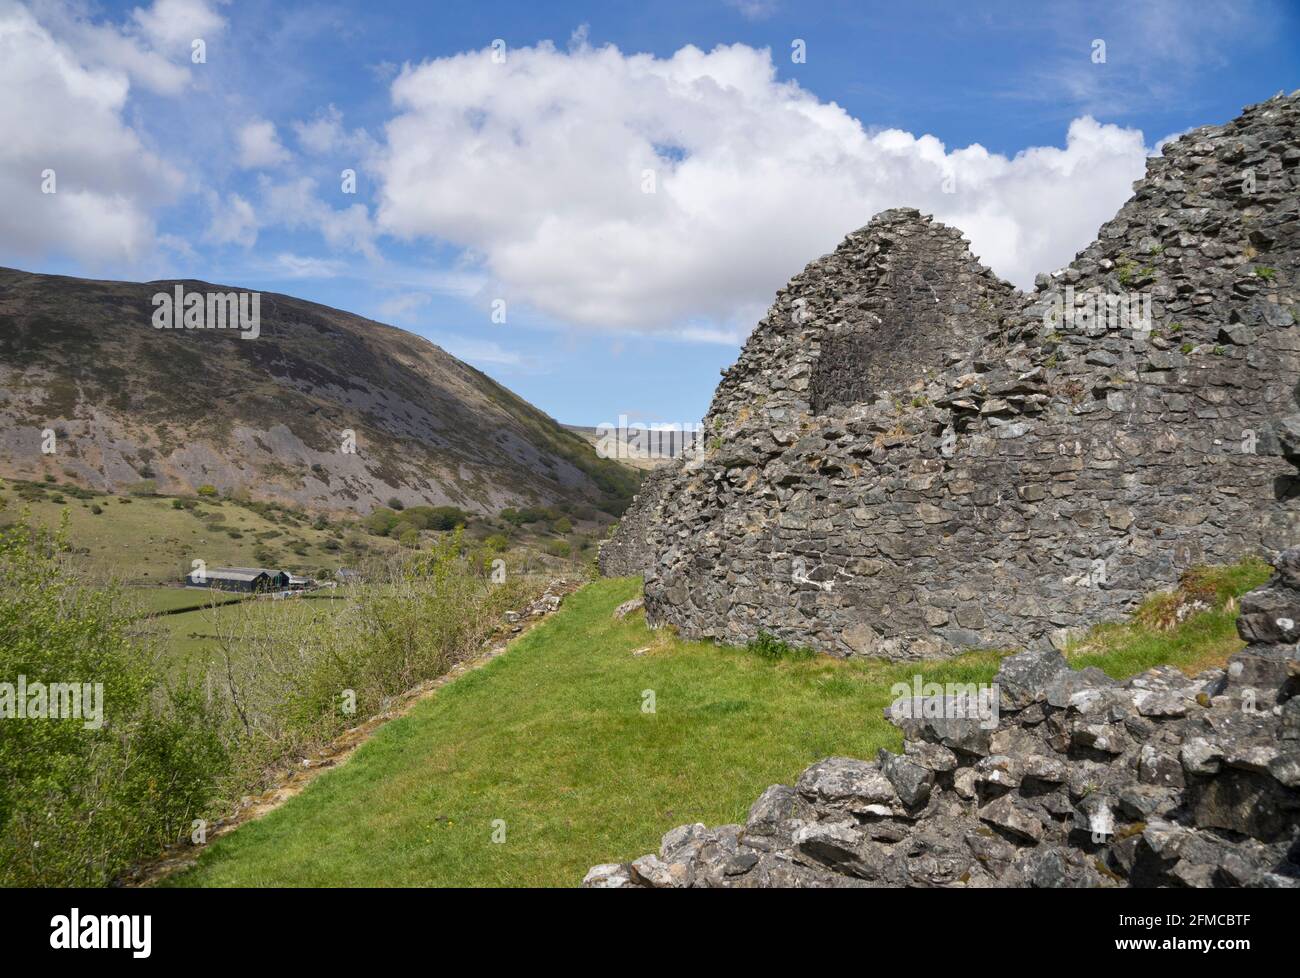 Vista di Castell y Bere, un castello gallese vicino Llanfihangel-y-pennant costruito da Llywelyn il Grande nel 1220 Gwynedd, Galles, Regno Unito Foto Stock